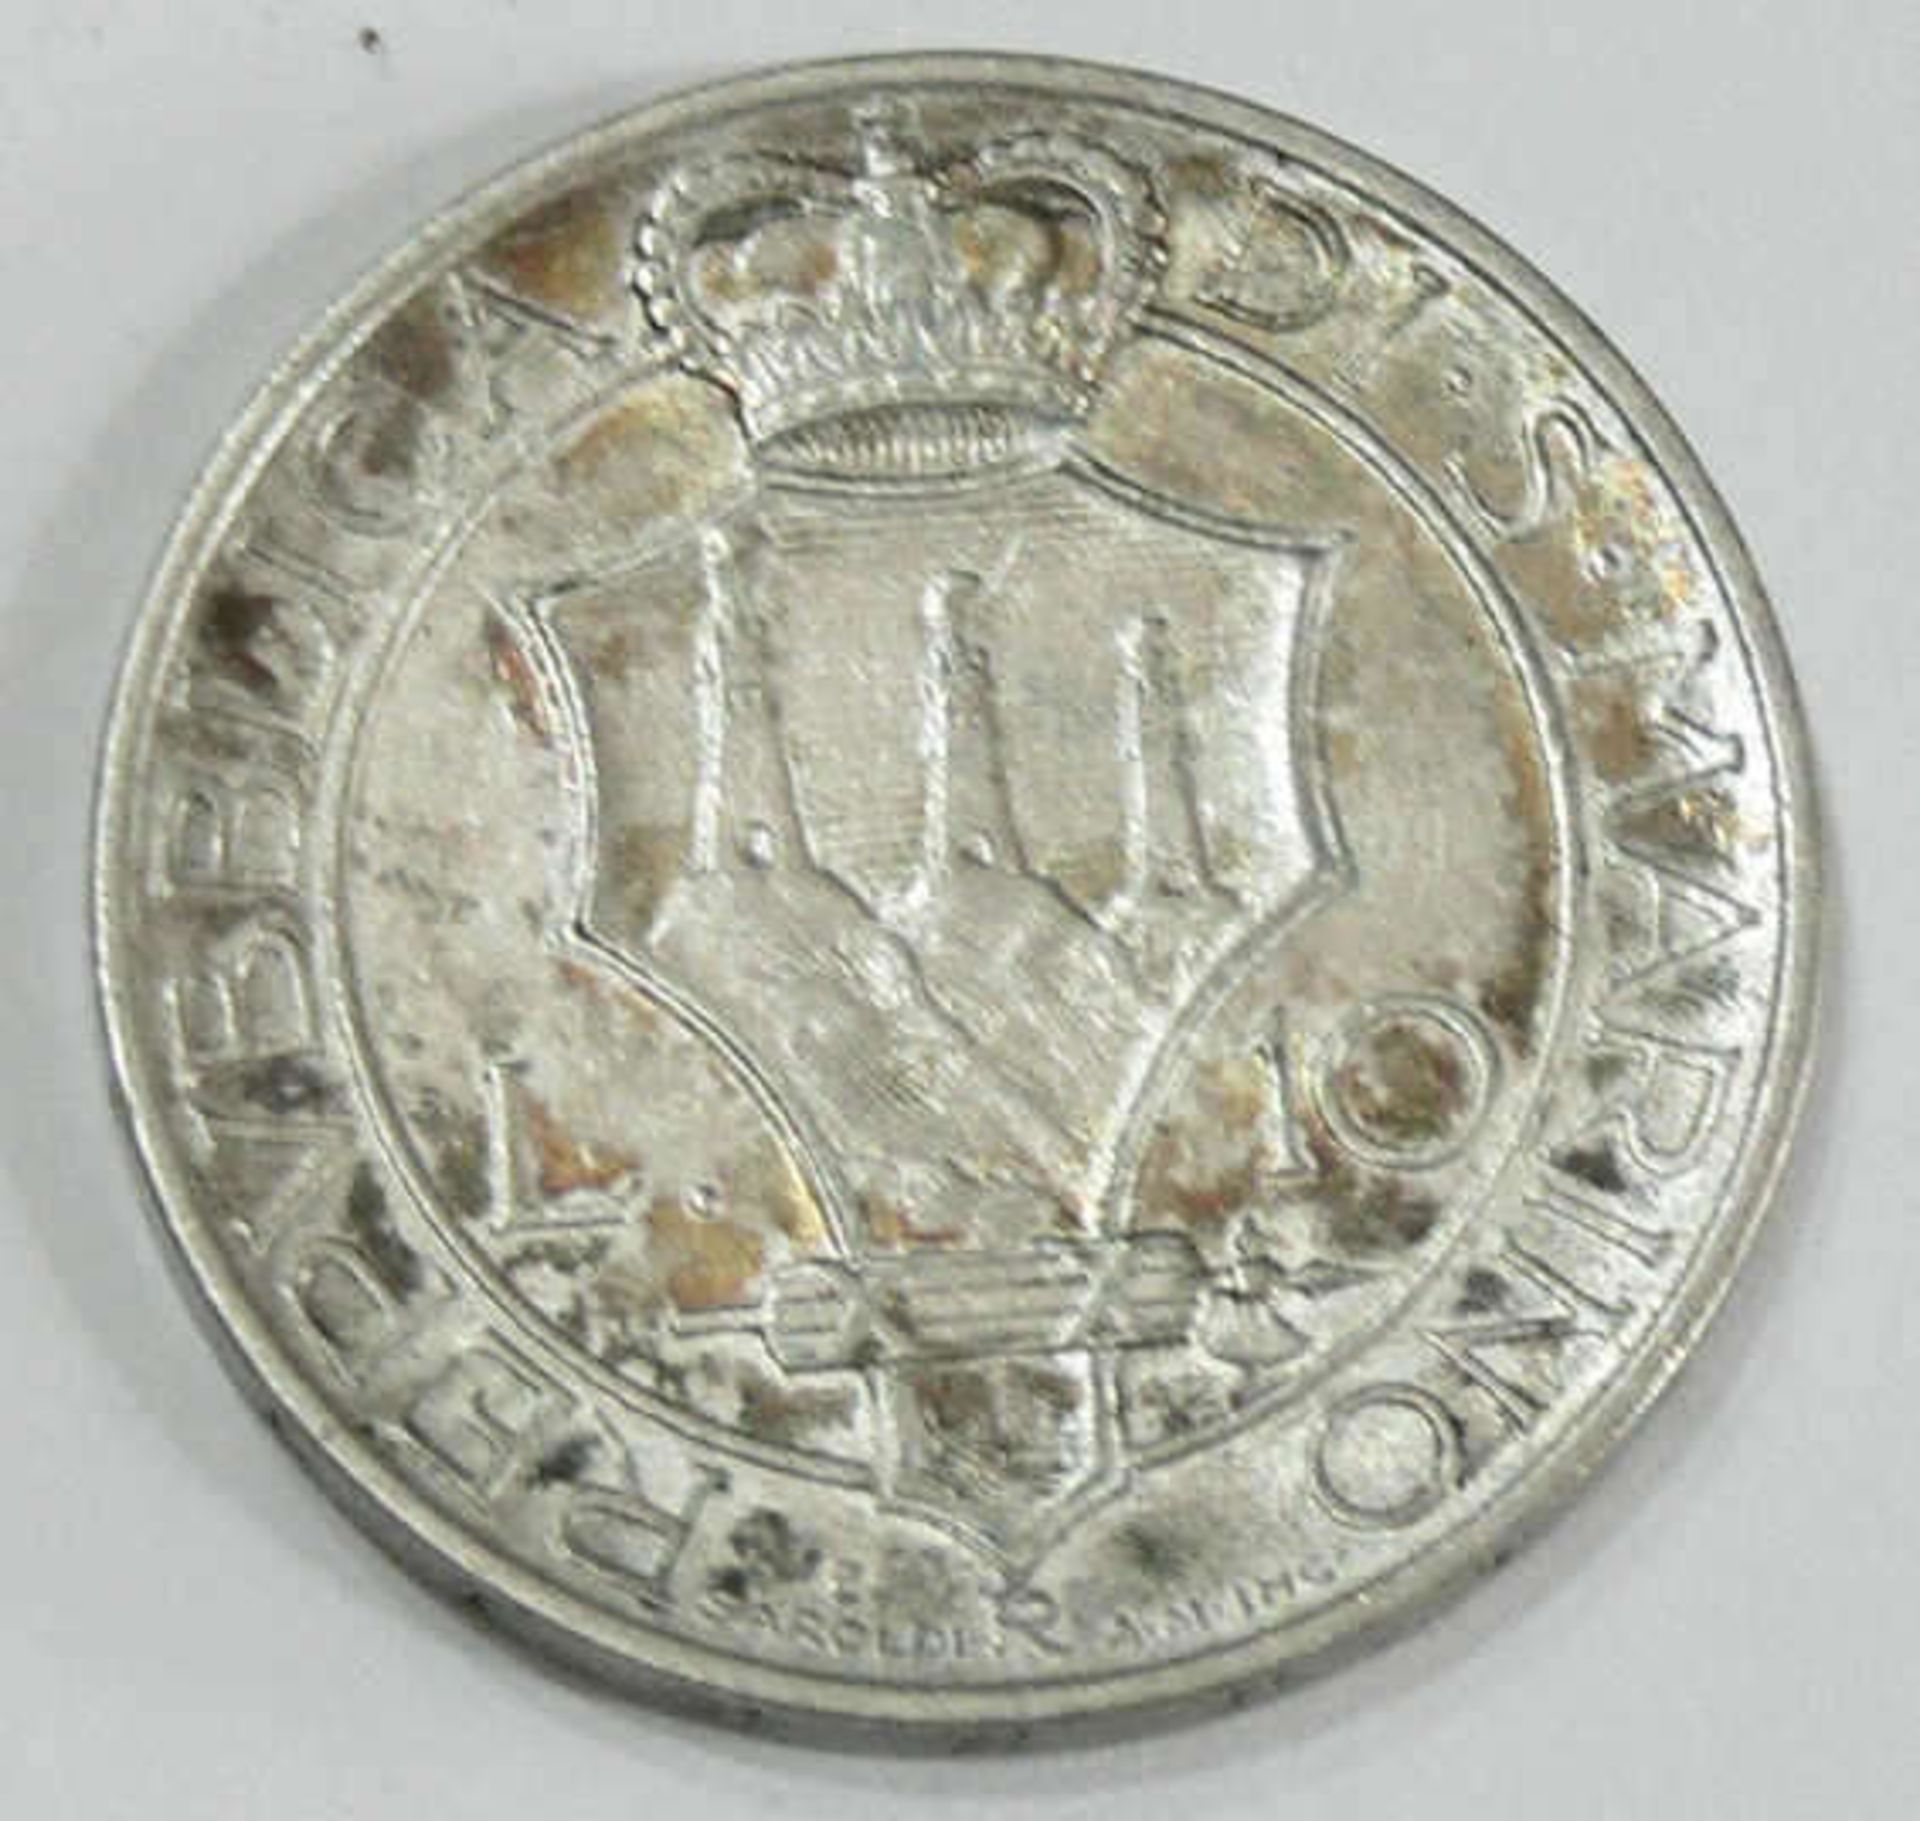 San Marino 1935, 10.- Lire - Silbermünze. Erhaltung: ss. San Marino 1935, 10.- Lire - silver coin. - Bild 2 aus 2